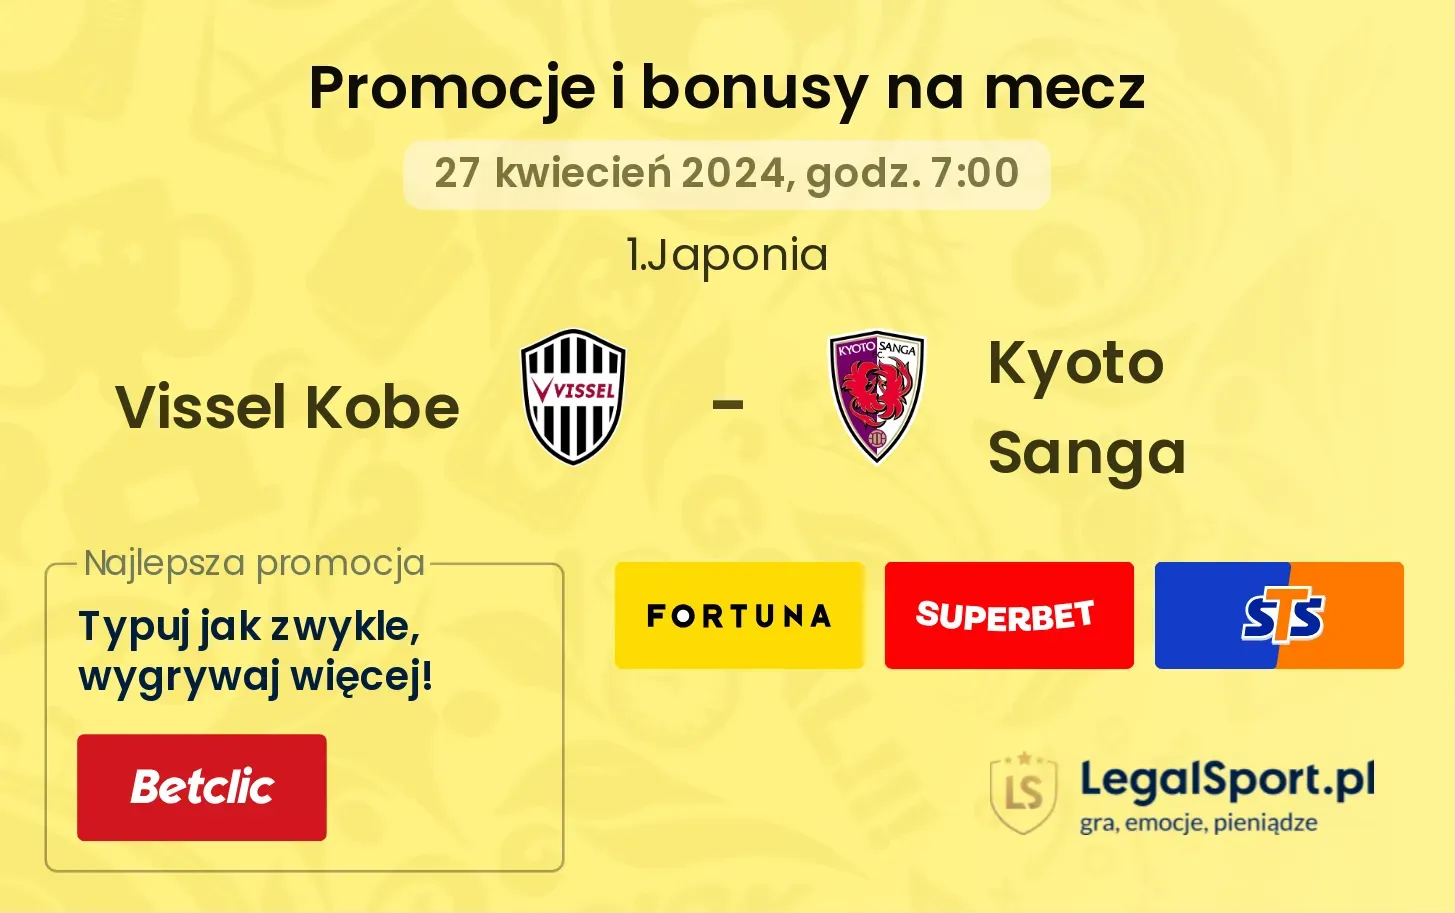 Vissel Kobe - Kyoto Sanga promocje bonusy na mecz